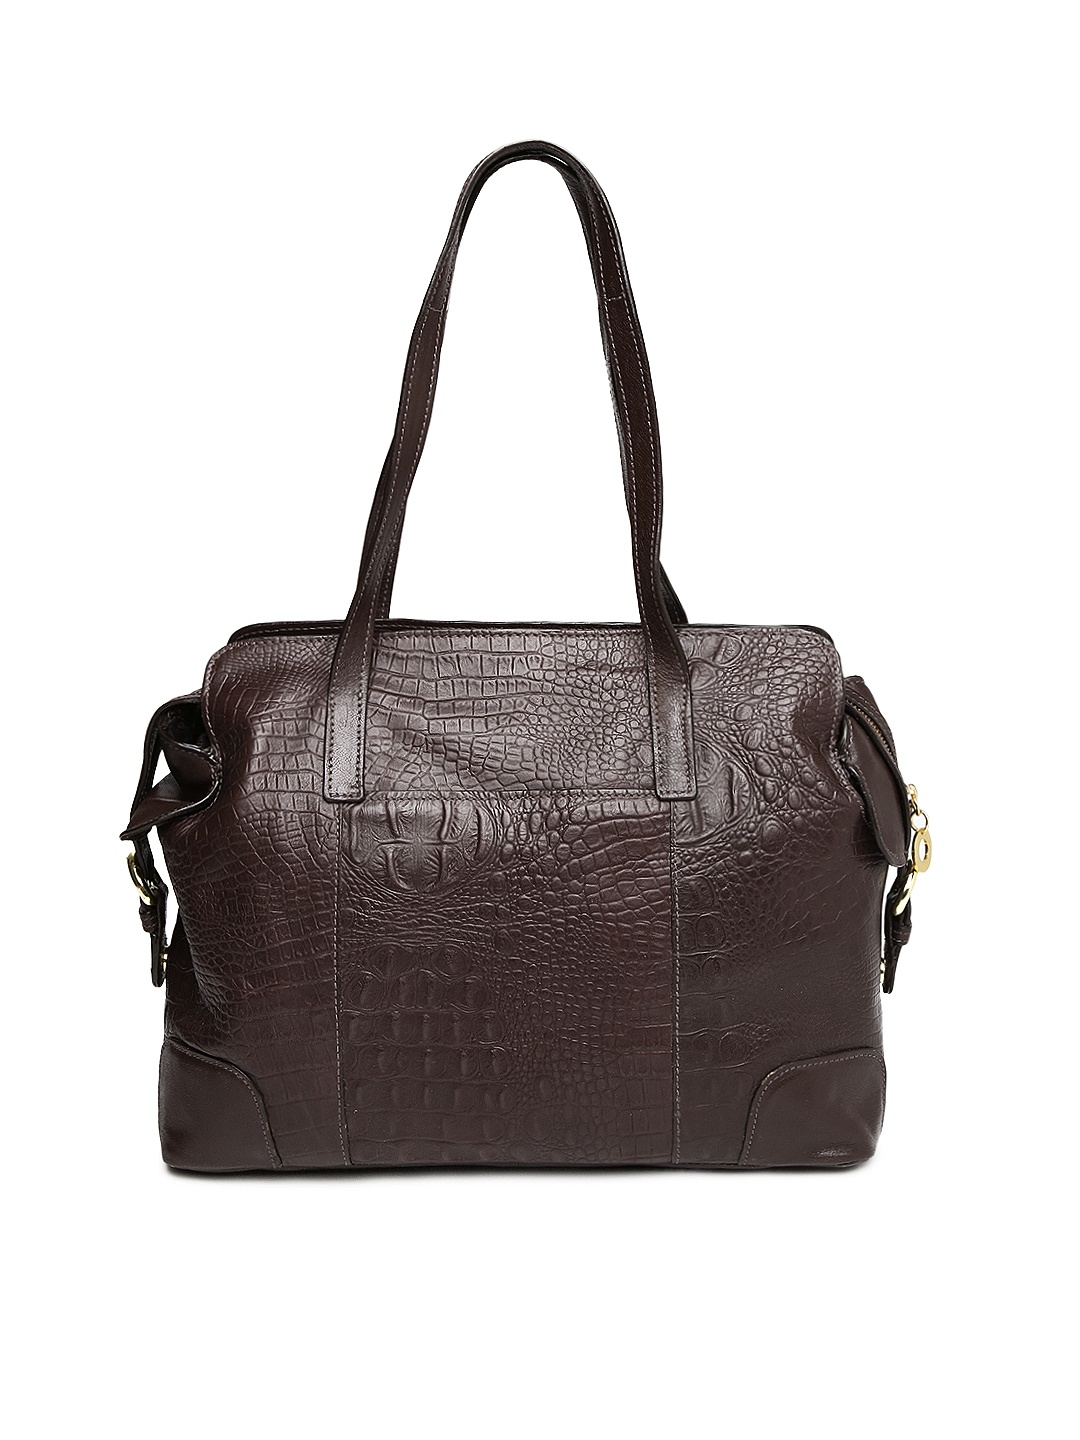 Myntra Hidesign Brown Leather Shoulder Bag 832844 | Buy Myntra Hidesign Handbags at best price 